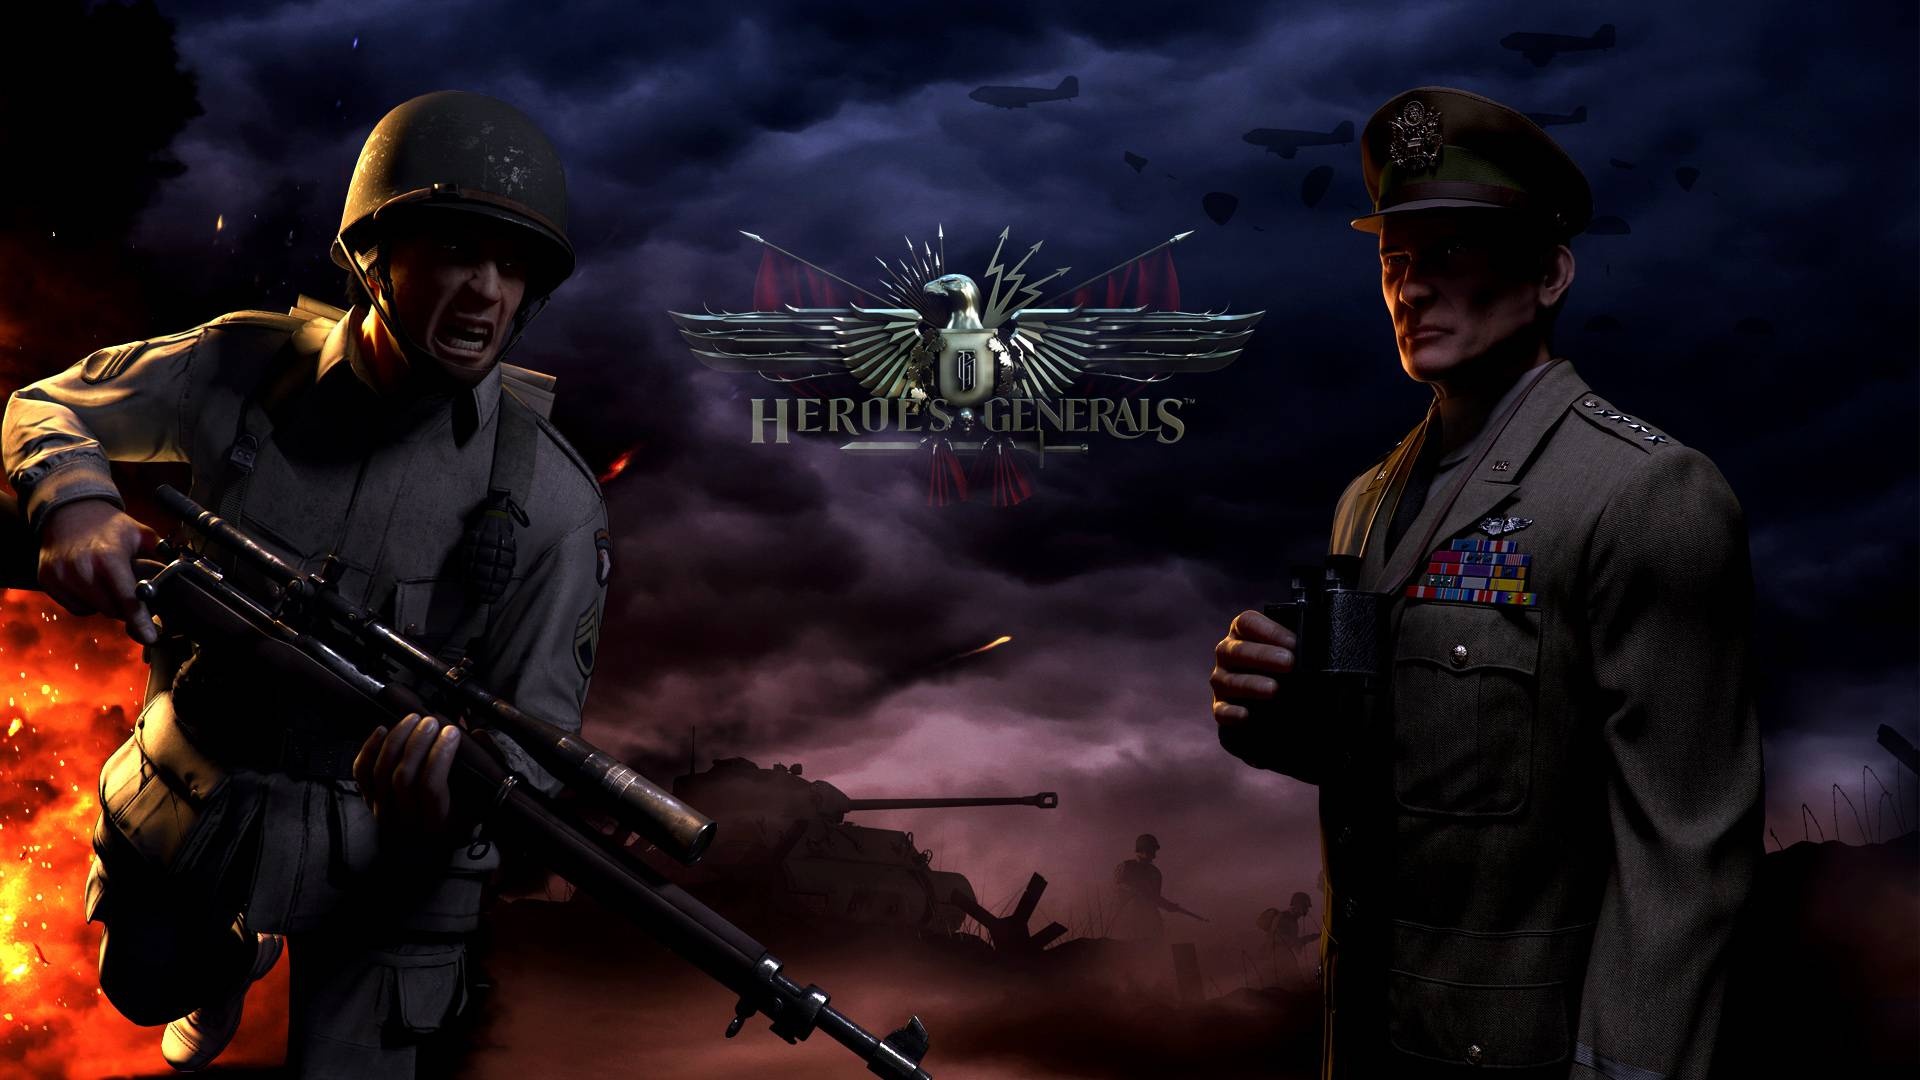 Heroes and Generals (Gaming), Free download, Heroic wallpapers, 1920x1080 Full HD Desktop